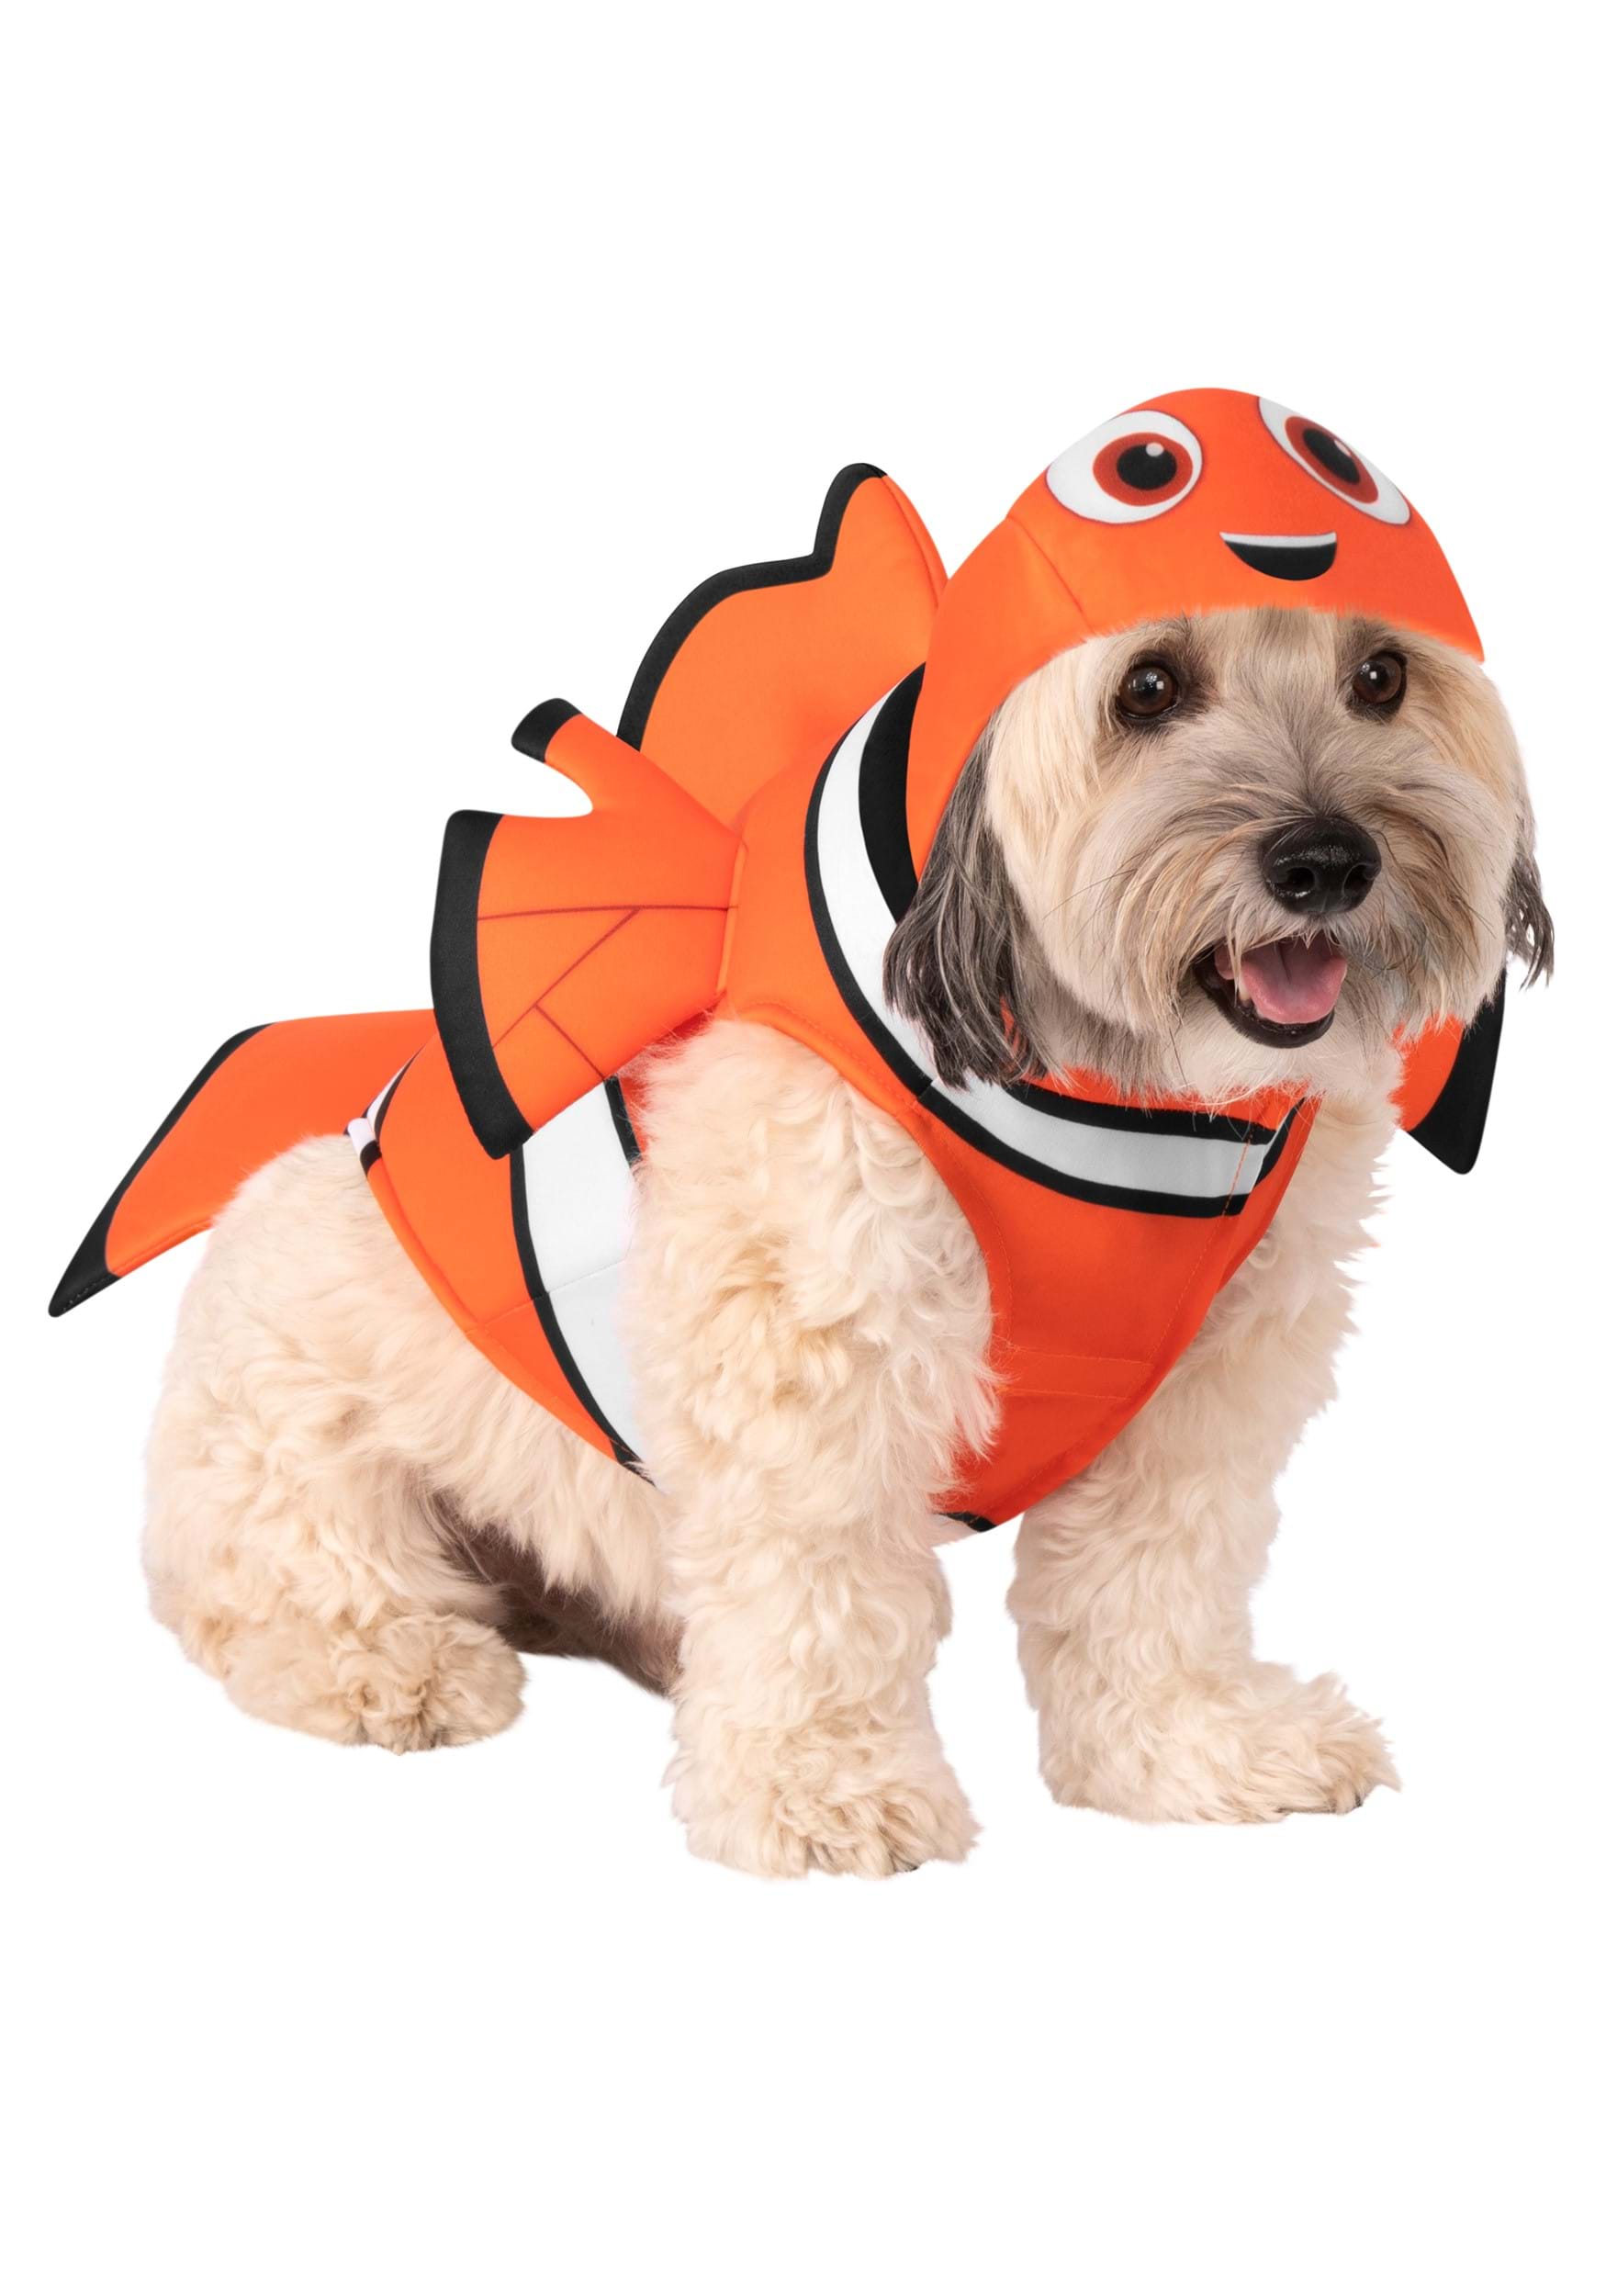 Nemo- Finding Nemo Dog Fancy Dress Costume